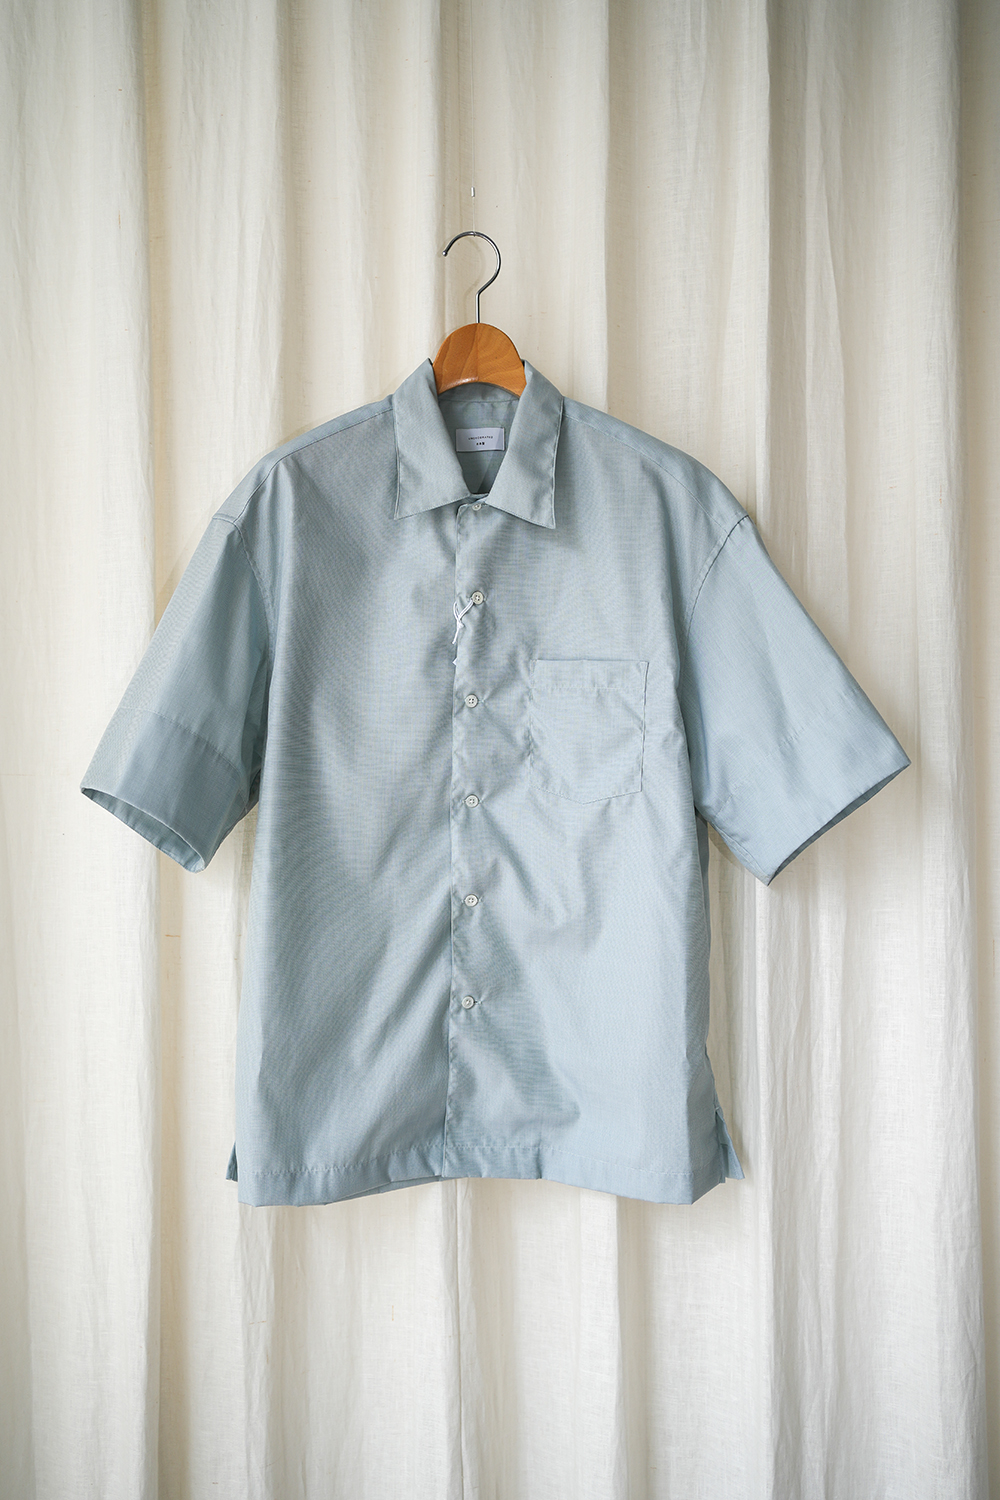 Pima Cotton S/S Shirt